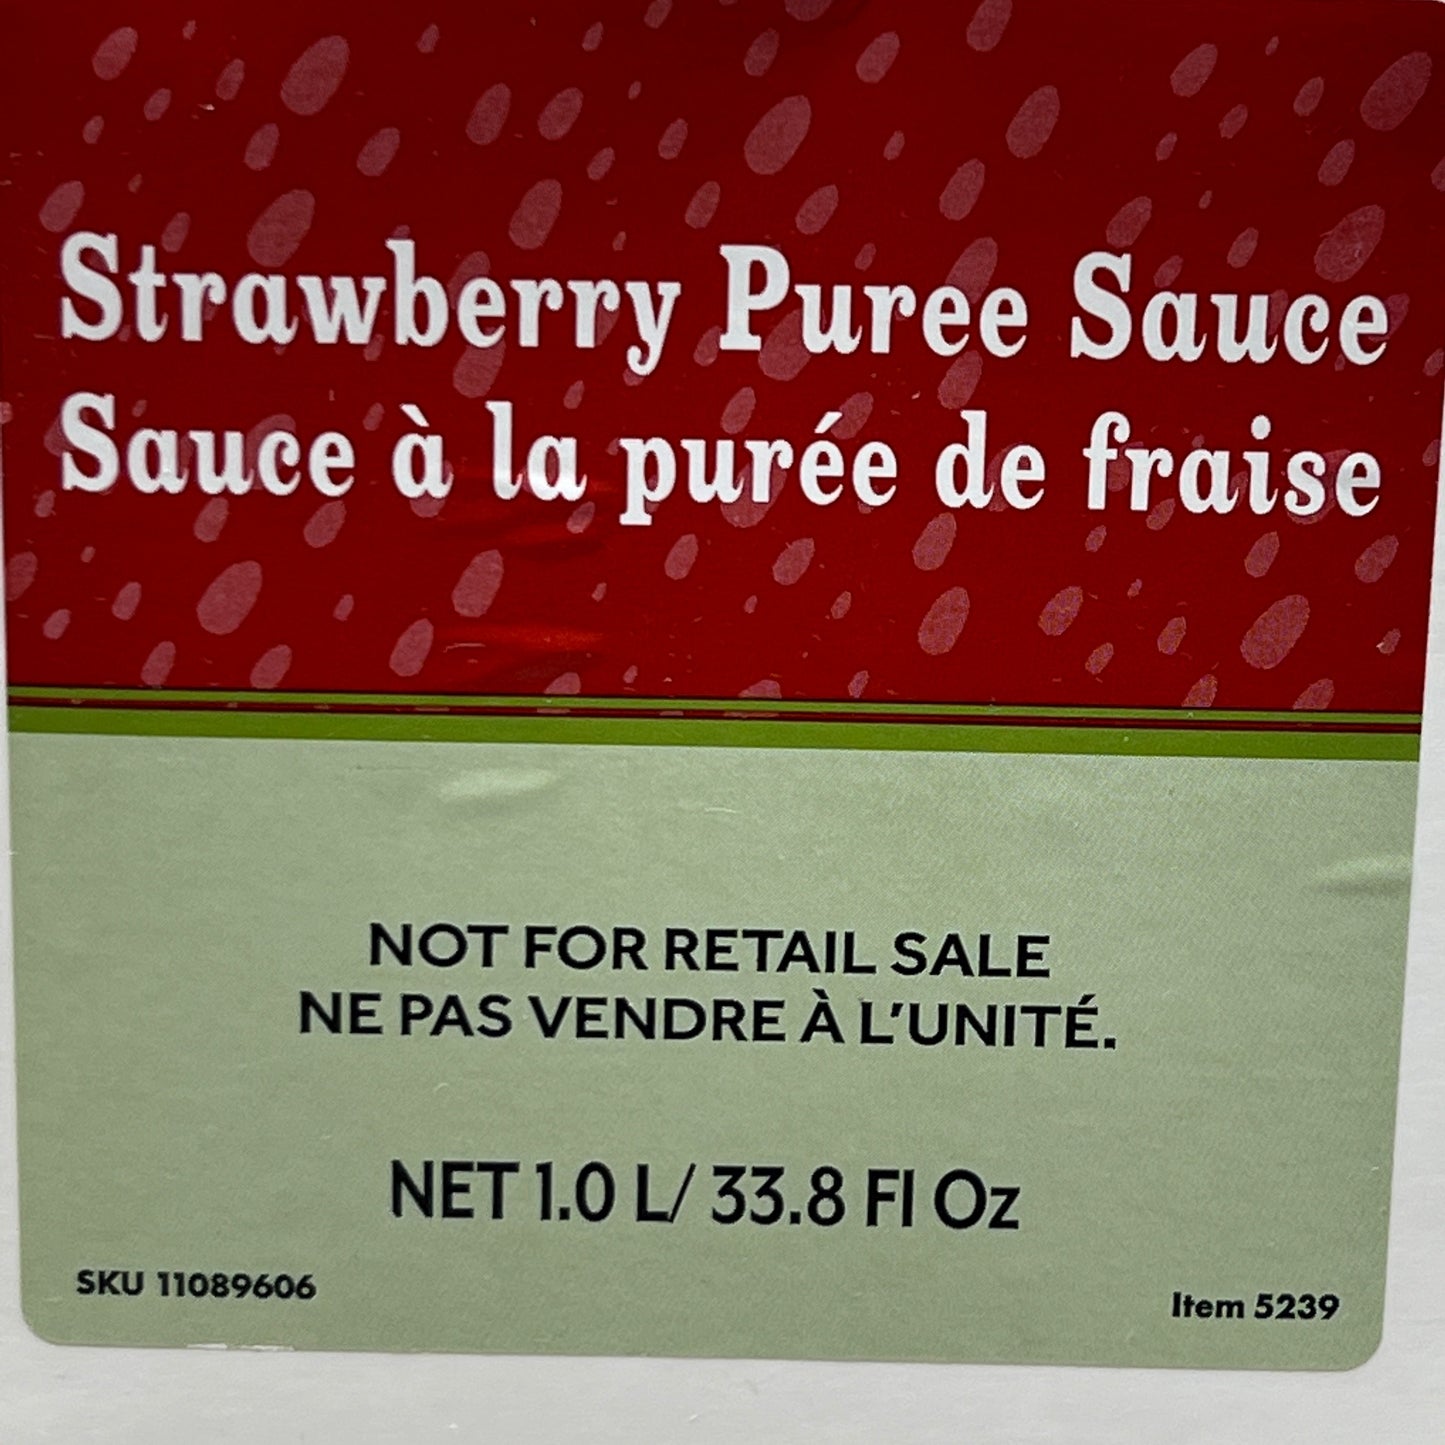 STARBUCKS (6 PACK) Strawberry Puree Sauce (33.8 Fl oz/bottle) 04/24 AS-IS